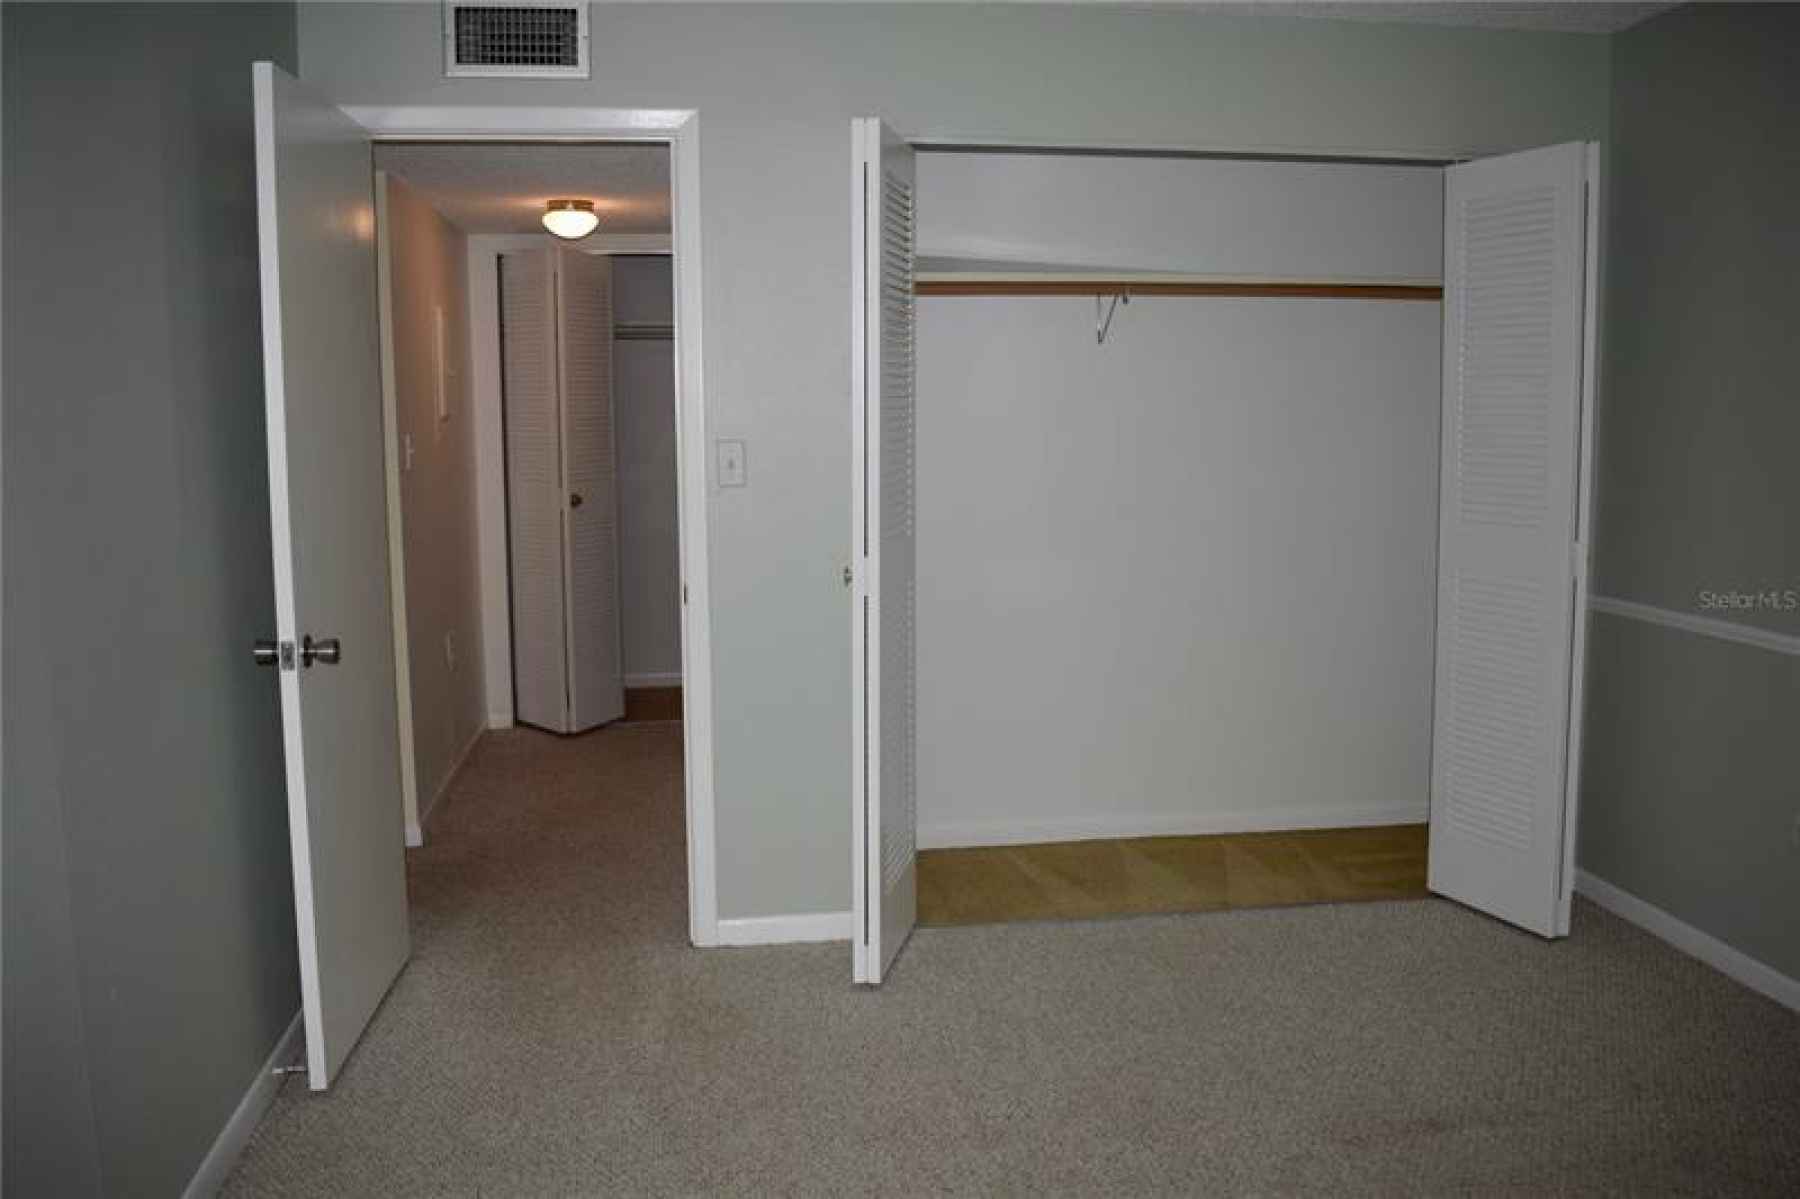 Bedroom closet